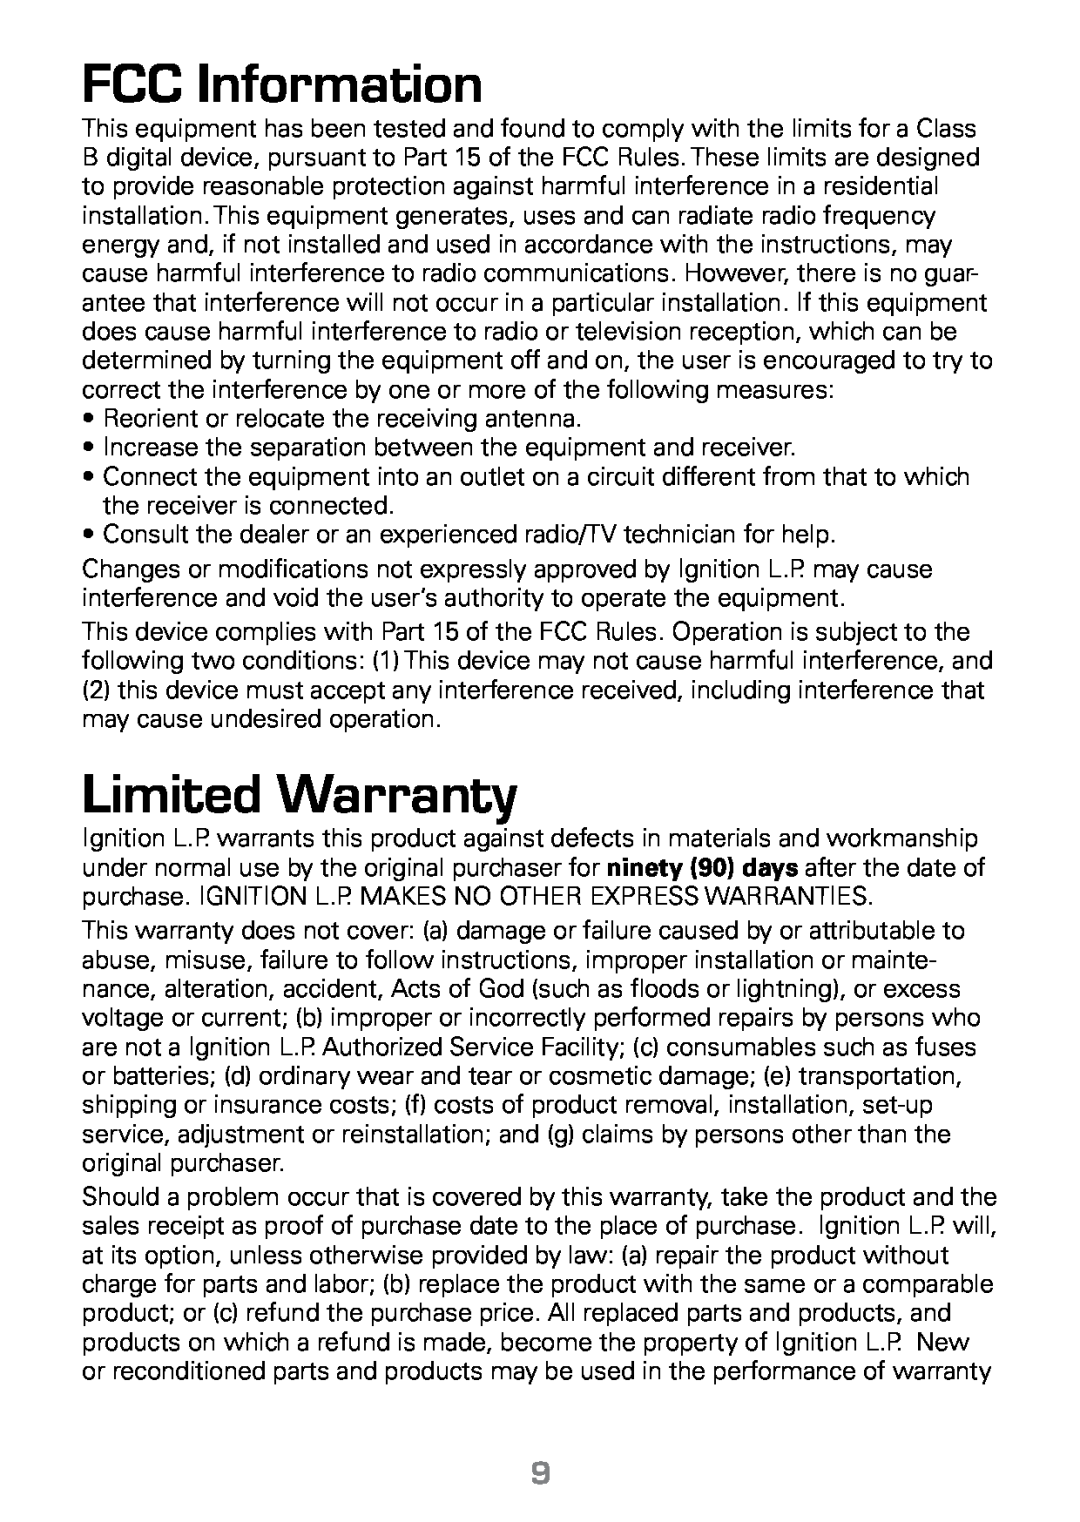 Radio Shack 16-1003 manual FCC Information, Limited Warranty 